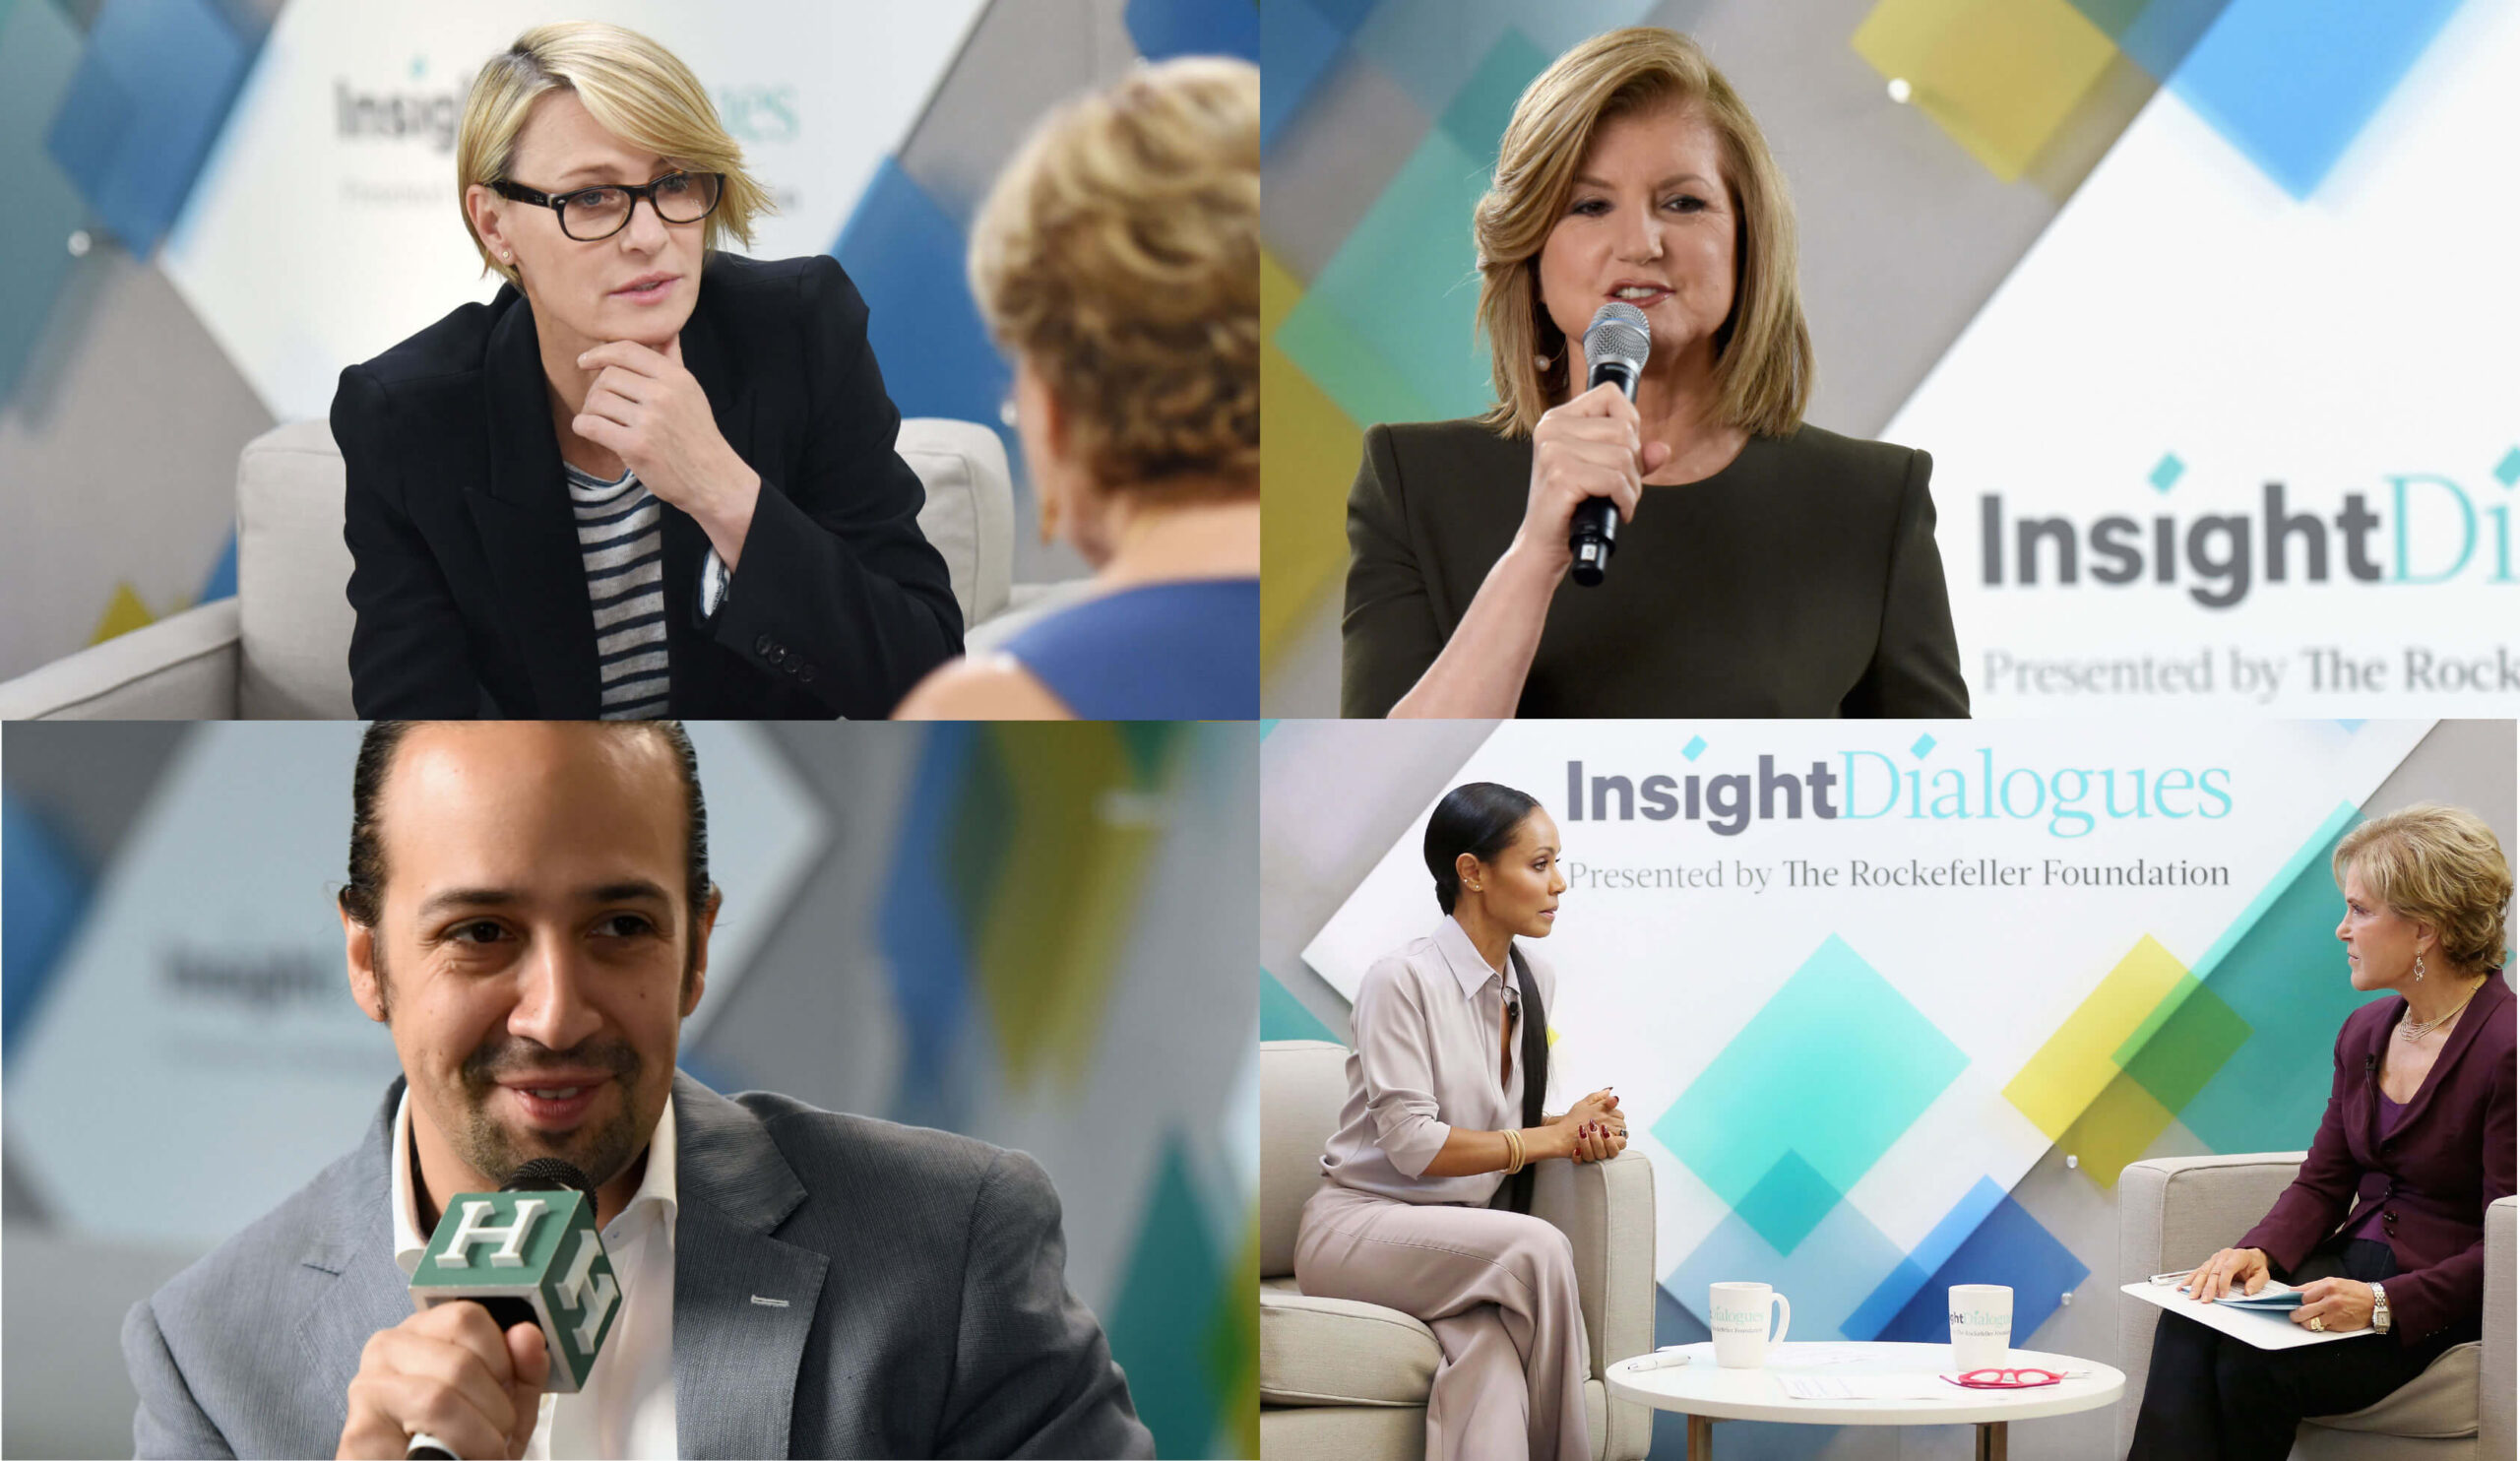 Robin Wright, Lin-Manuel Miranda and Jada Pinkett Smith at the Rockefeller Foundation's Insight Dialogues event